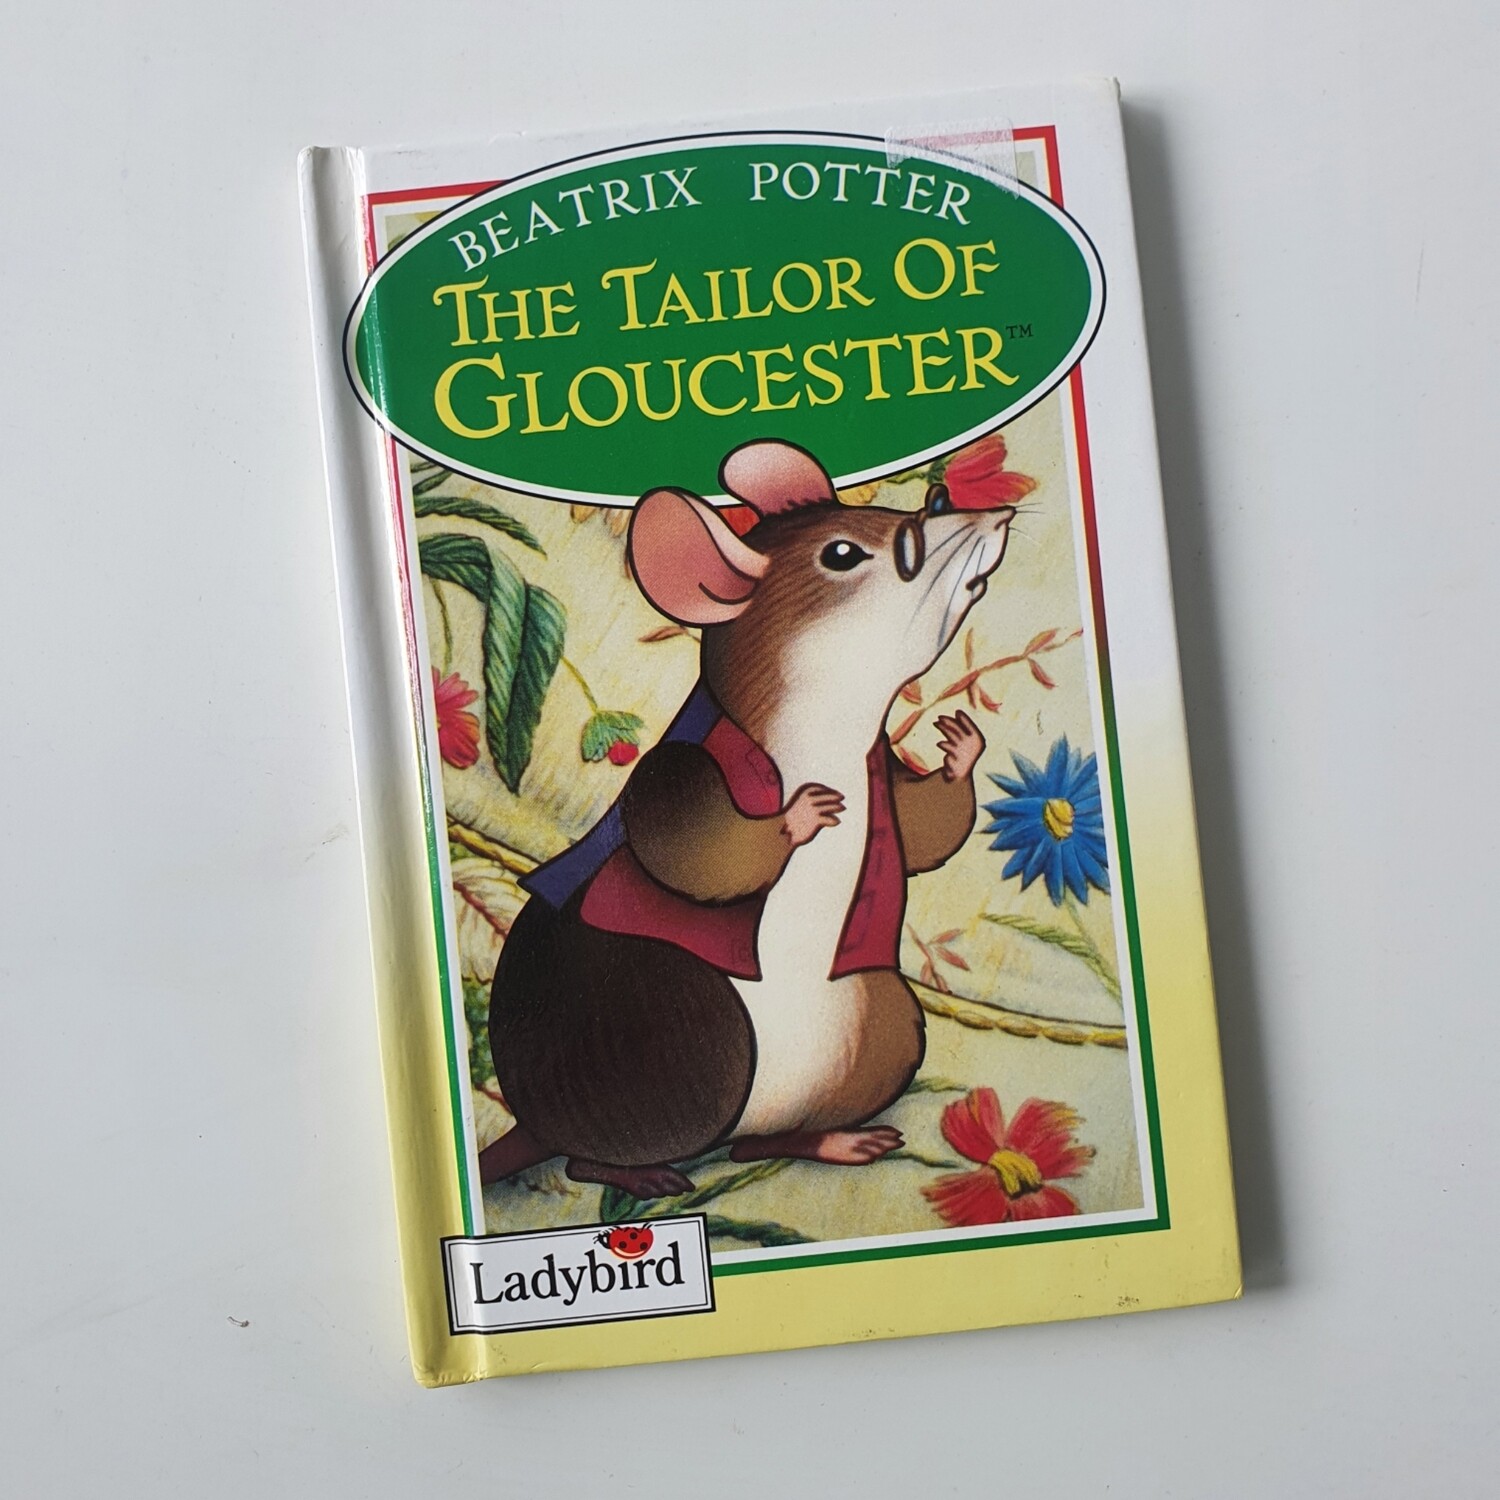 The Tailor of Gloucester Notebook - Ladybird book, Beatrix Potter